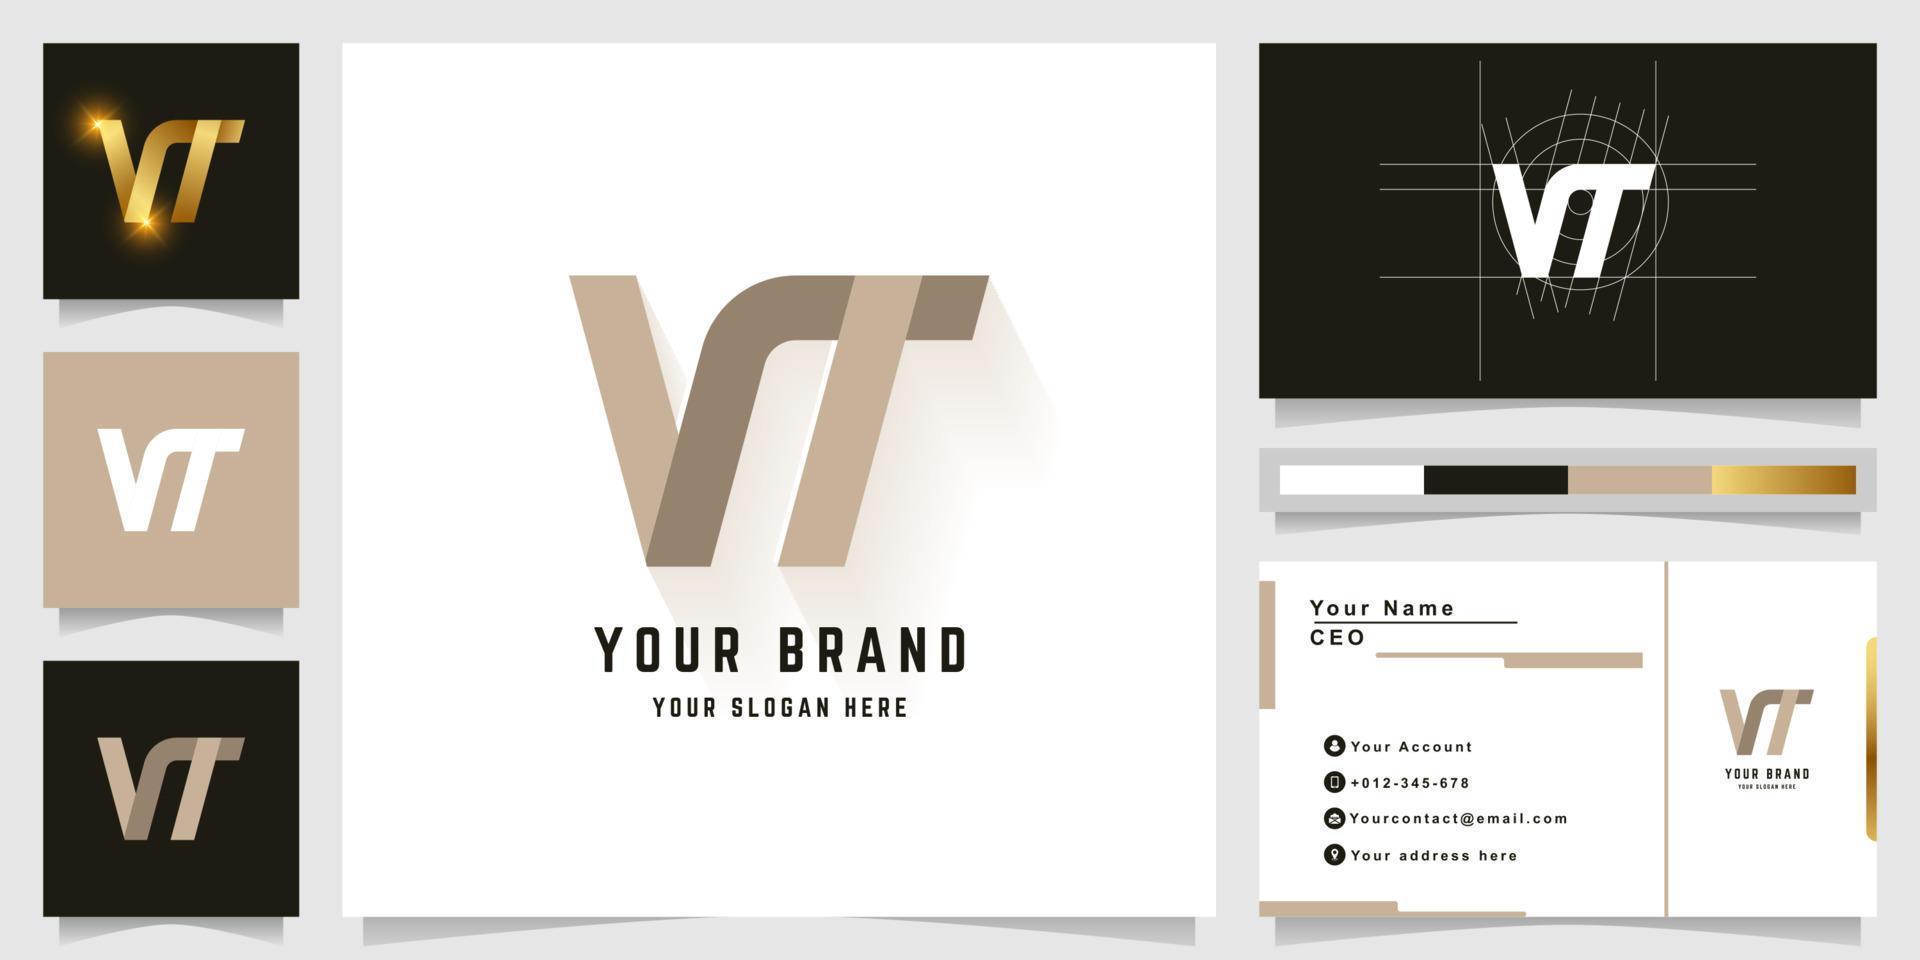 Letter VT or NT monogram logo with business card design vector